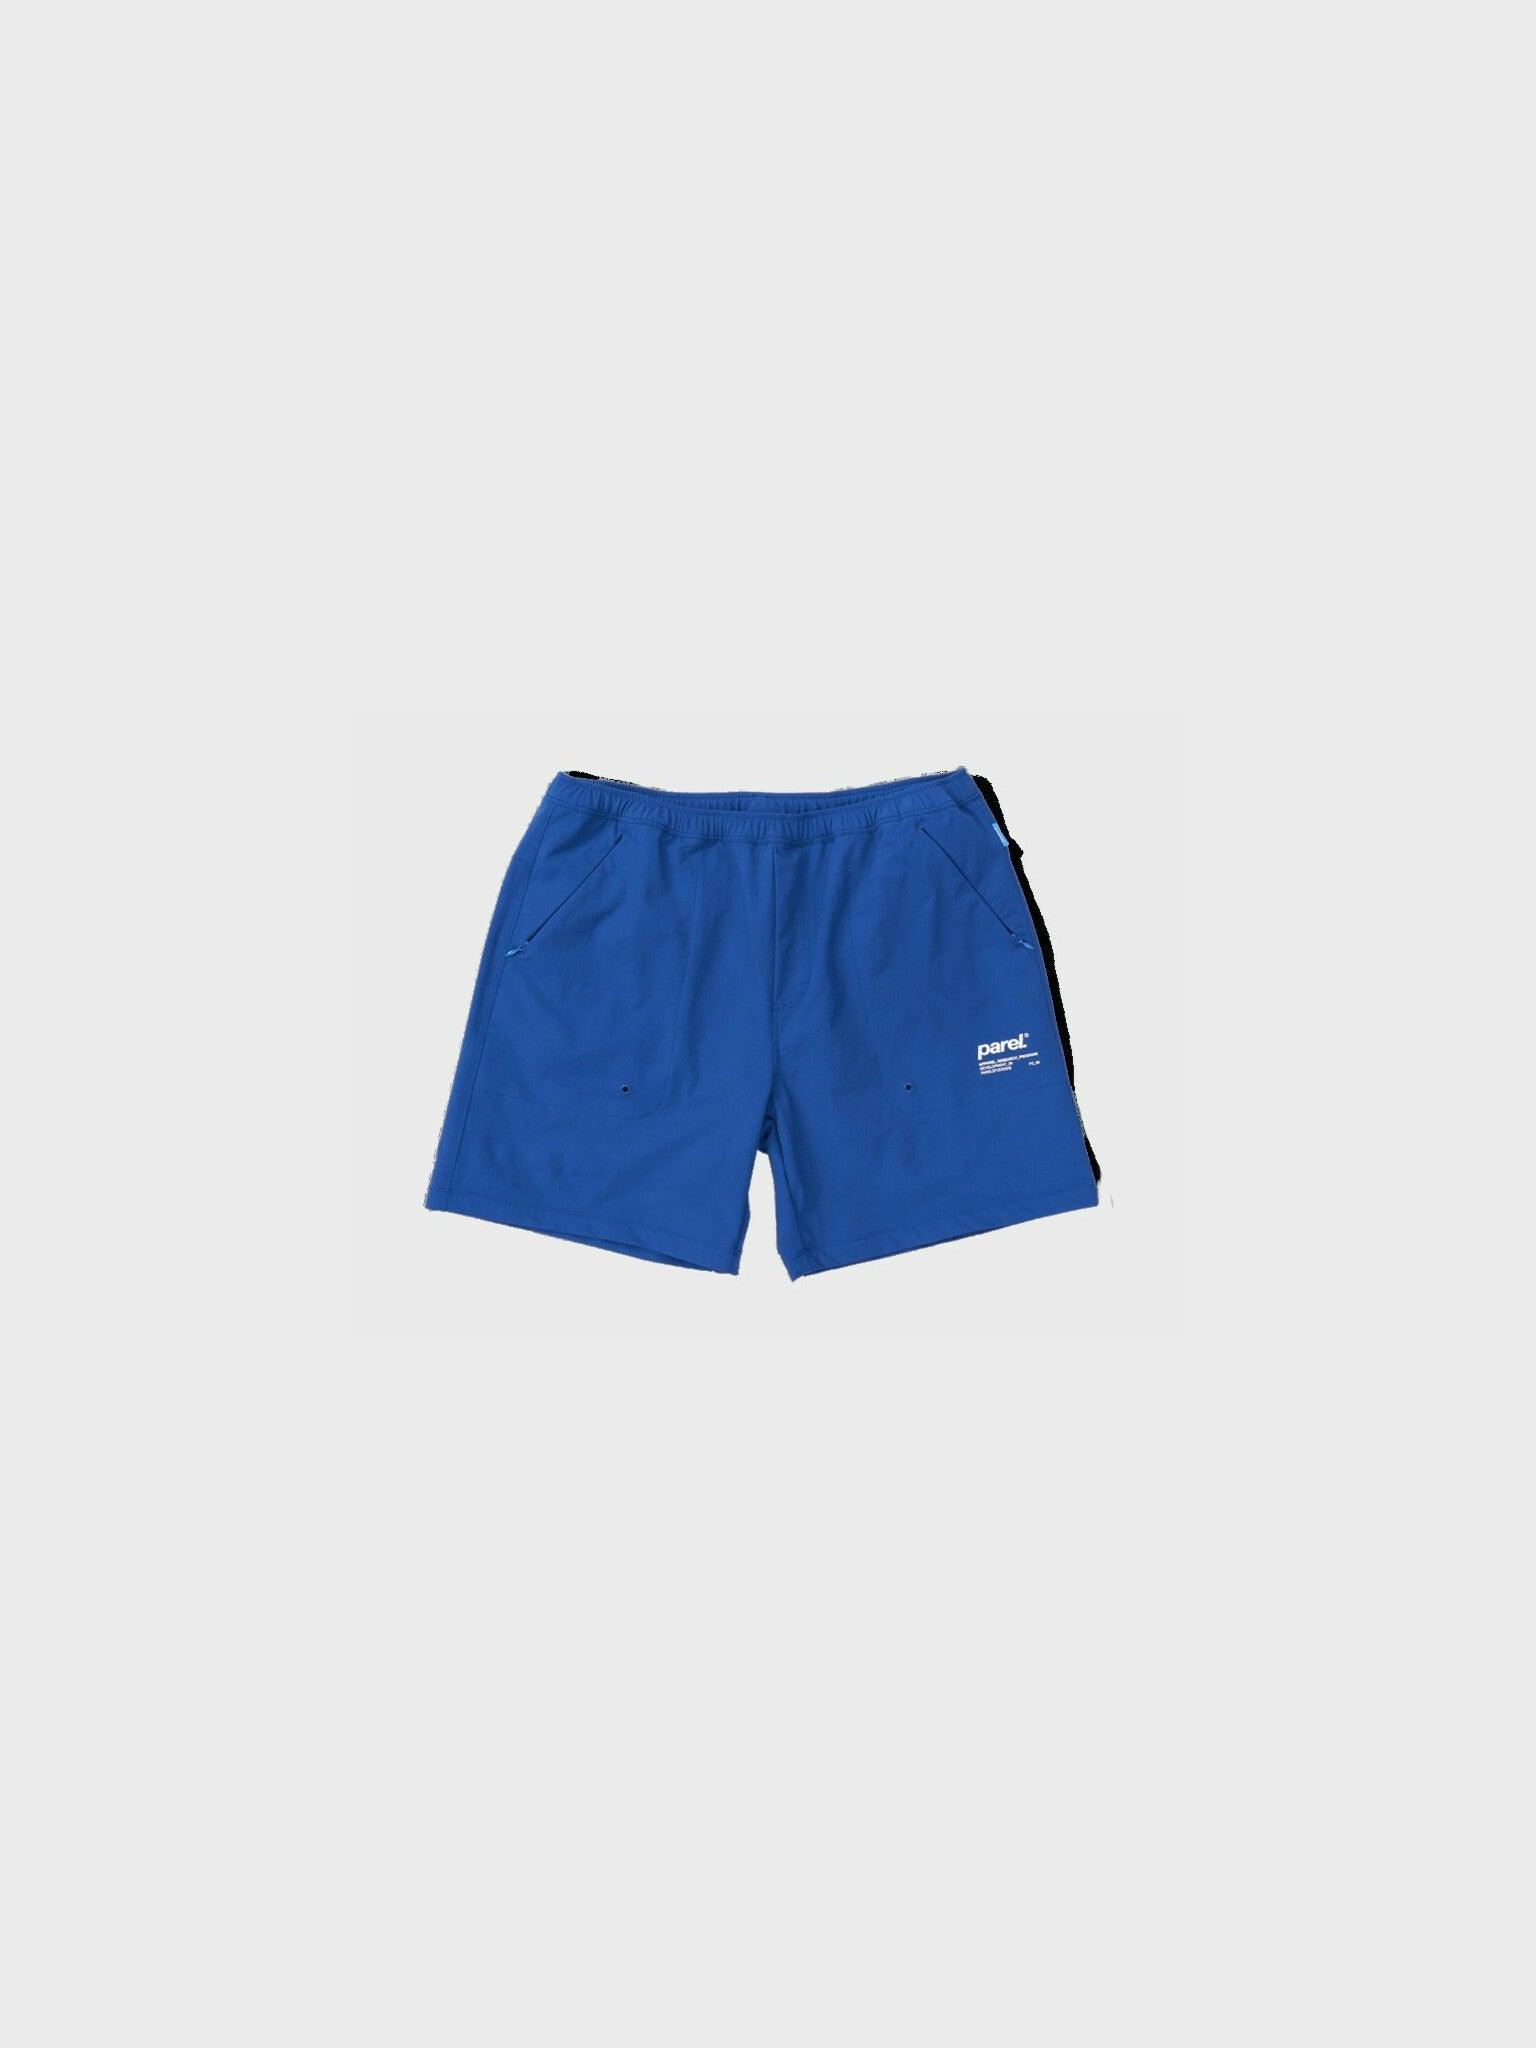 Parel Saana Shorts - Cobalt Blue